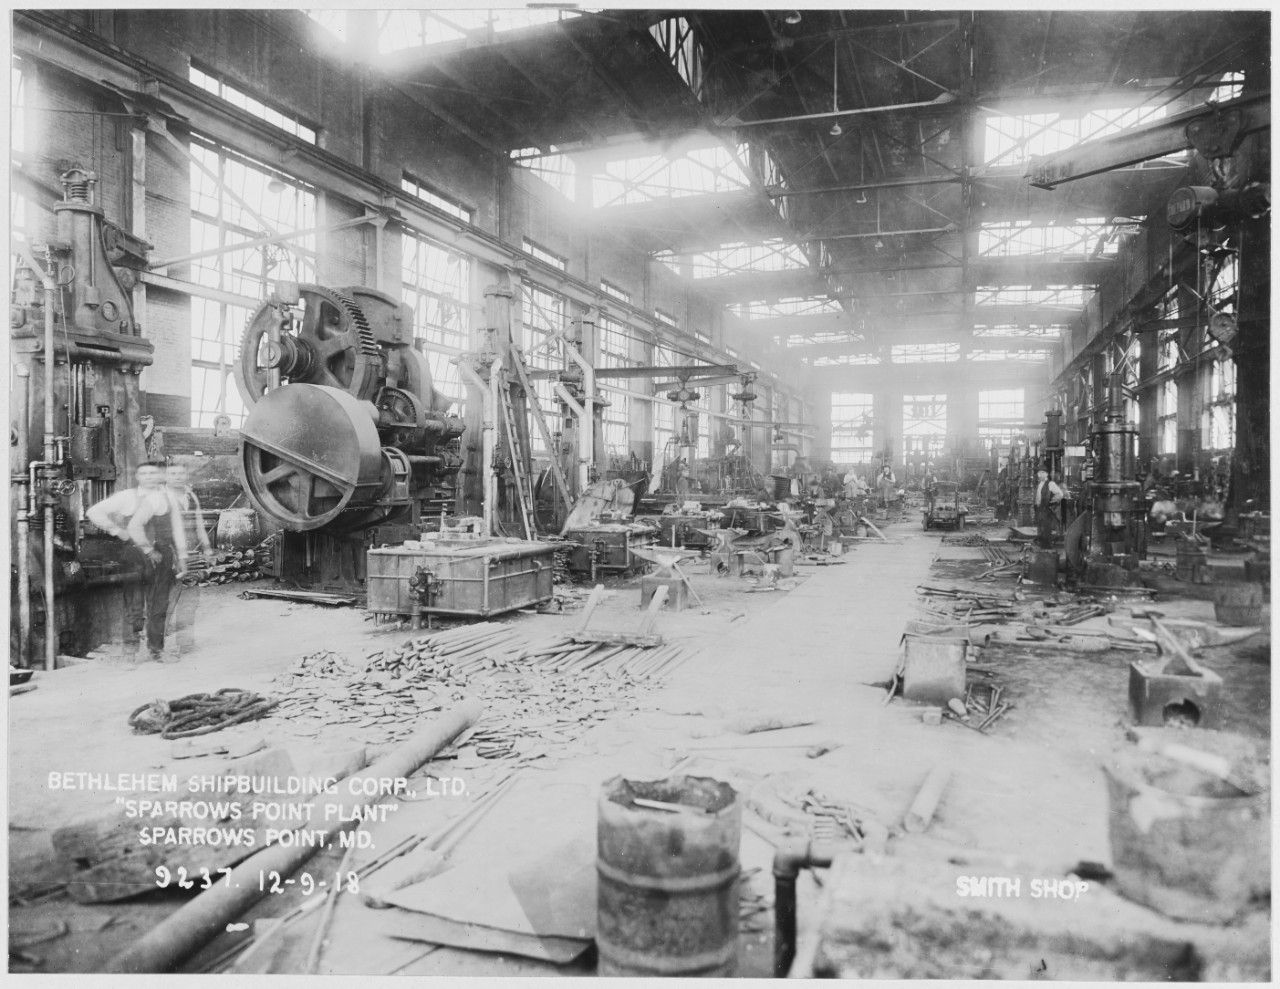 Bethlehem Shipbuilding Corporation. Smith Shop. December 9, 1918